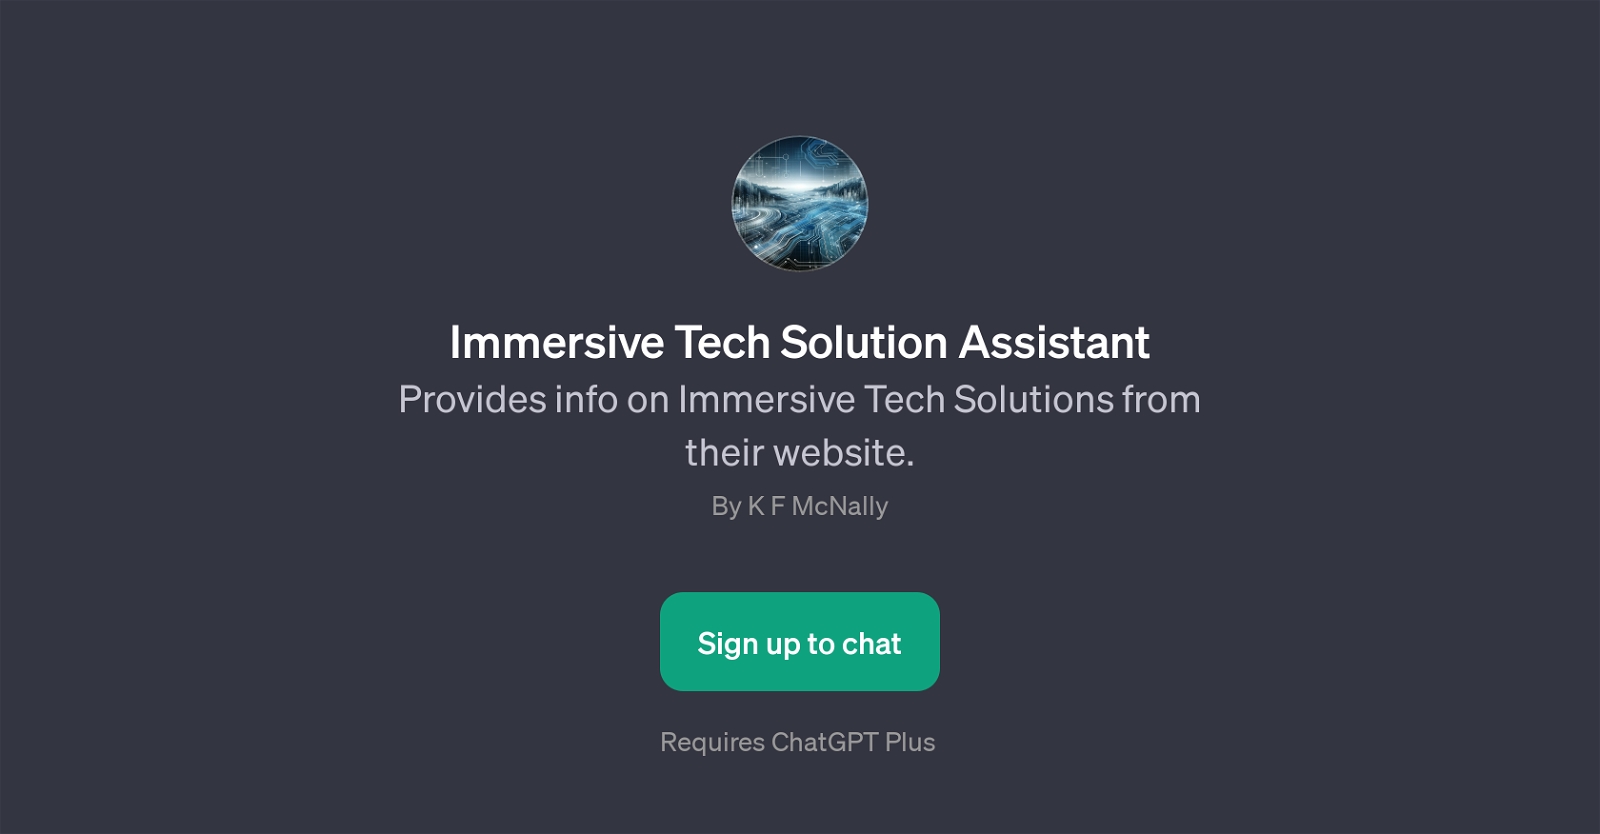 Immersive Tech Solution Assistant website